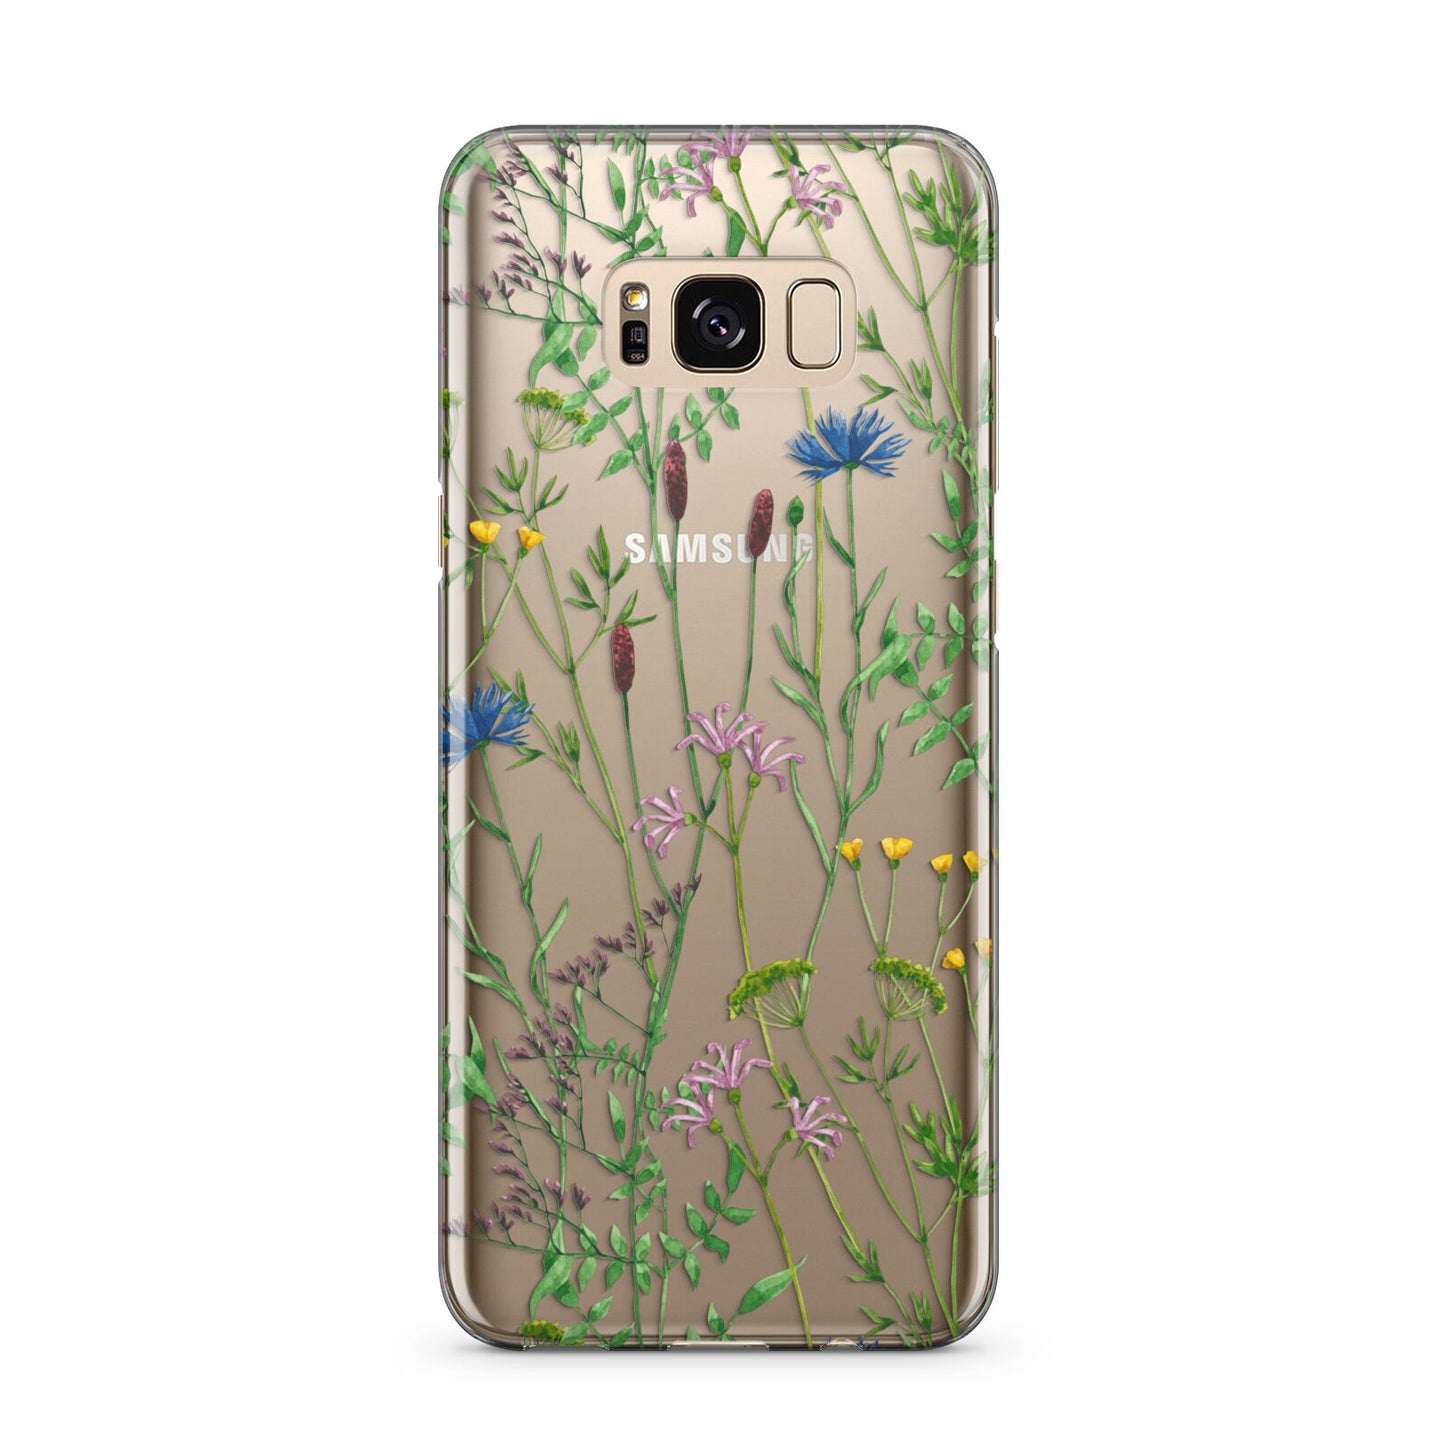 Wildflowers Samsung Galaxy S8 Plus Case